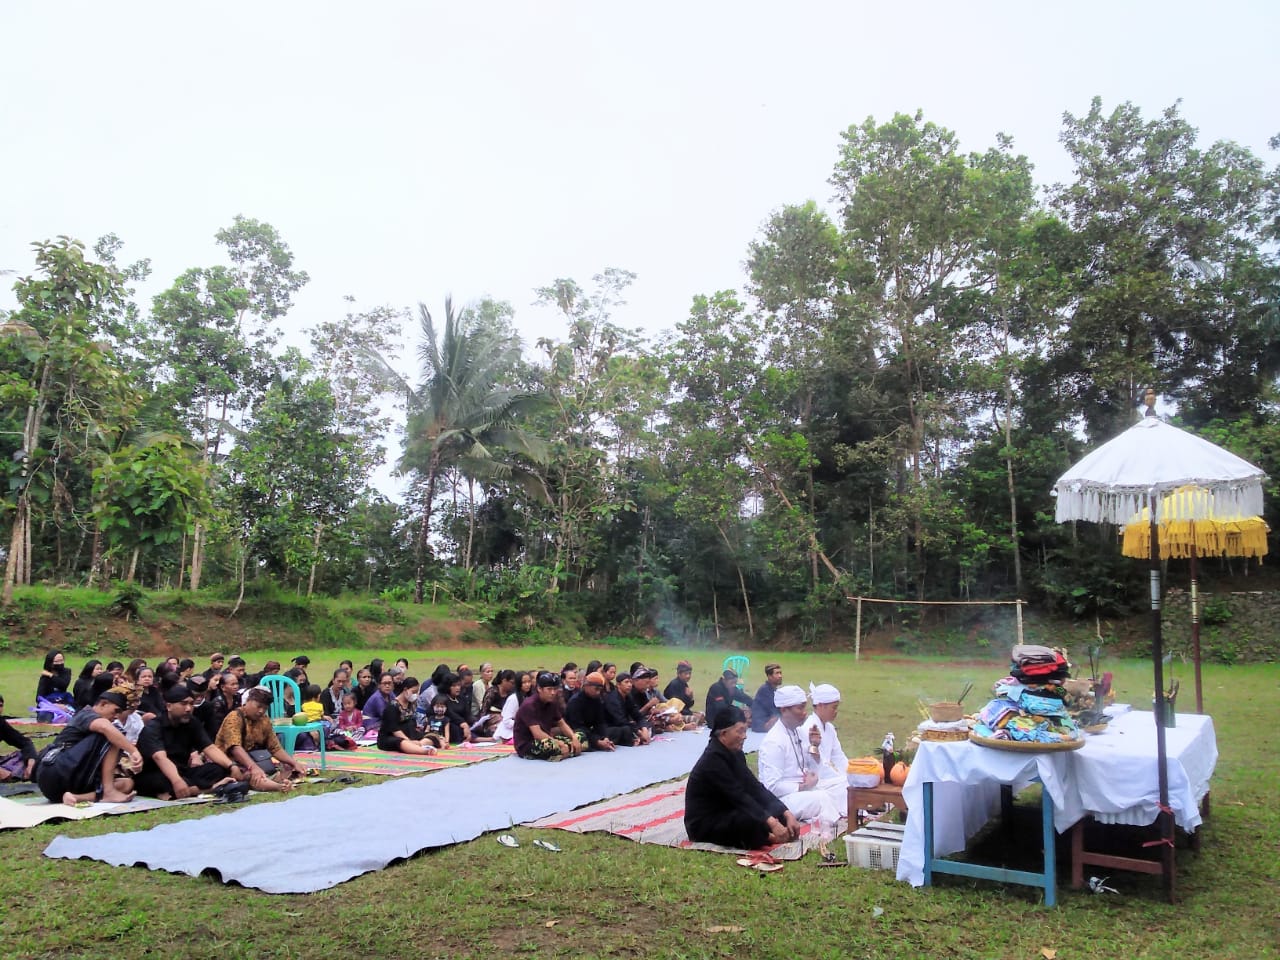 Menyambangi ke Umat Hindu dalam Upacara Entas-Entas Leluhur di Desa Klinting, Kecamatan Somagede  